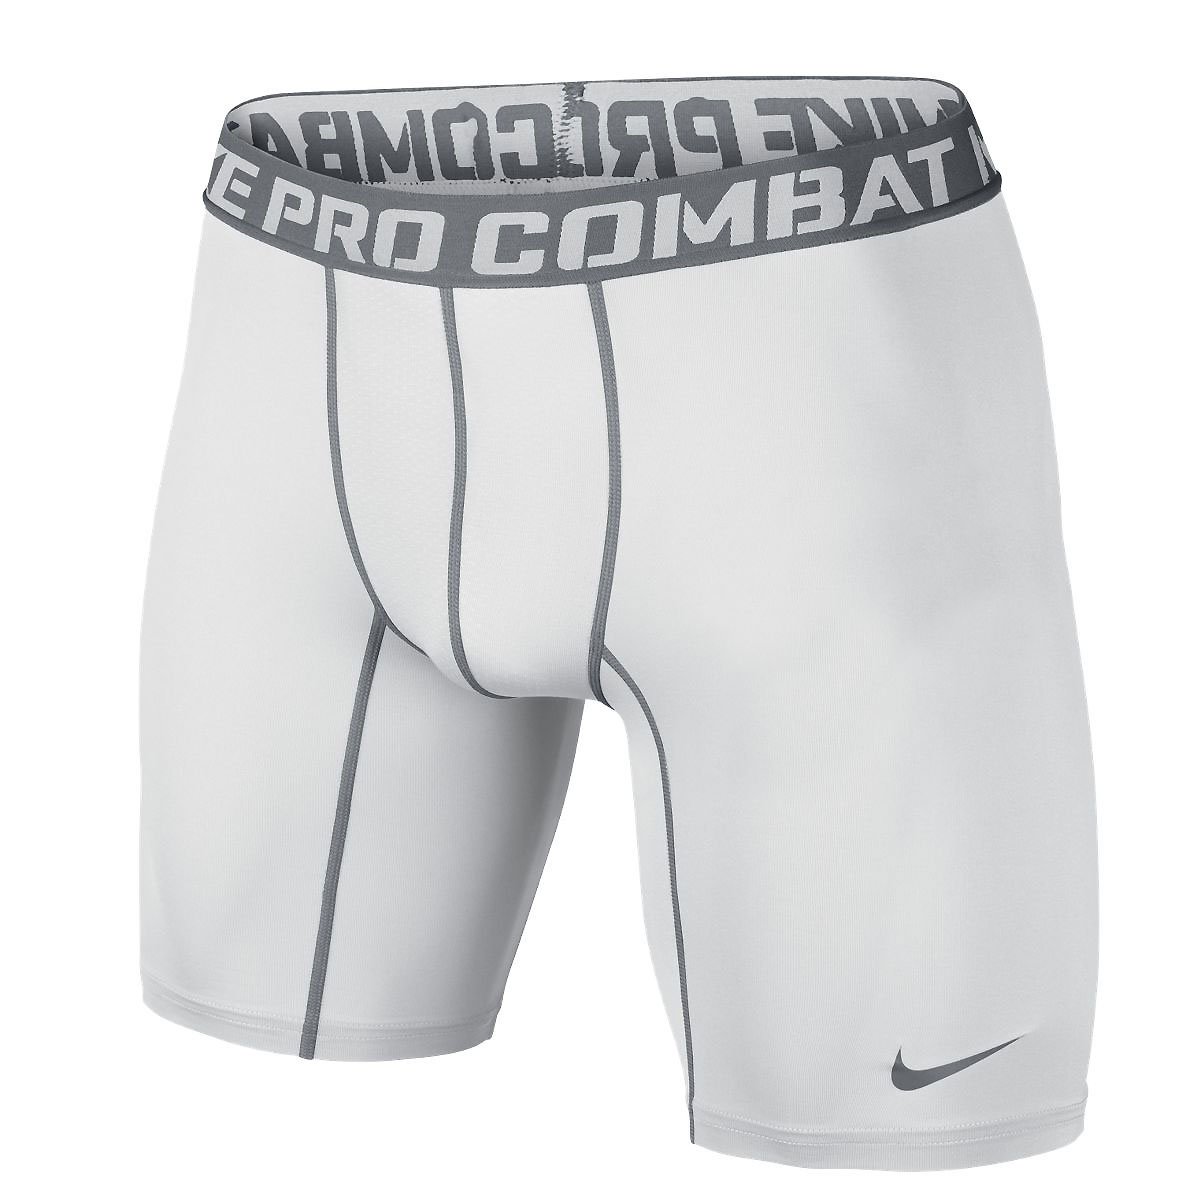 Nike Pro Combat Compression